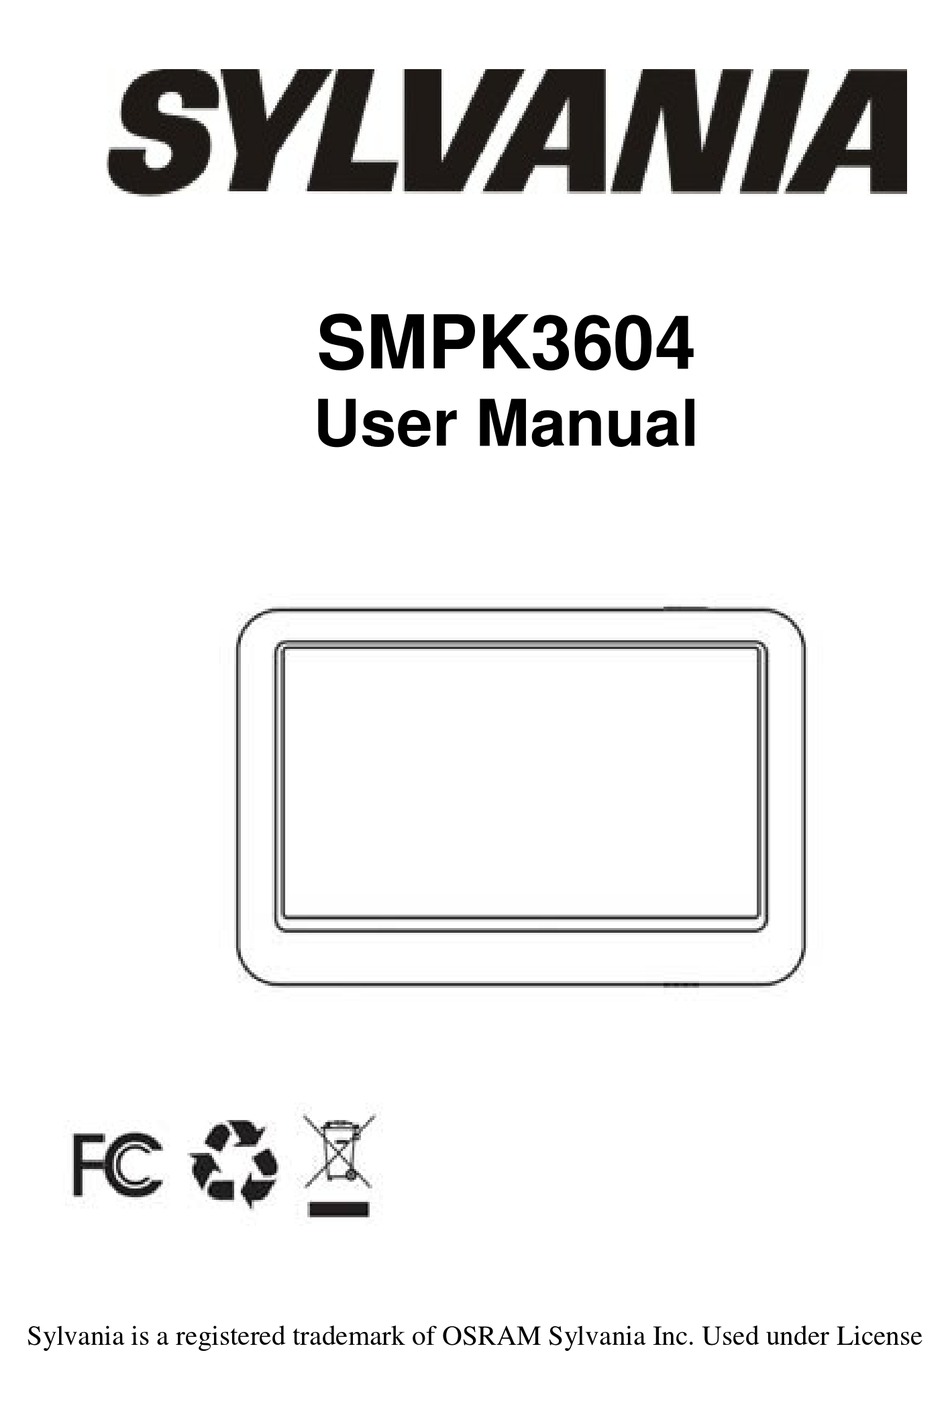 sylvania-smpk3604-user-manual-pdf-download-manualslib